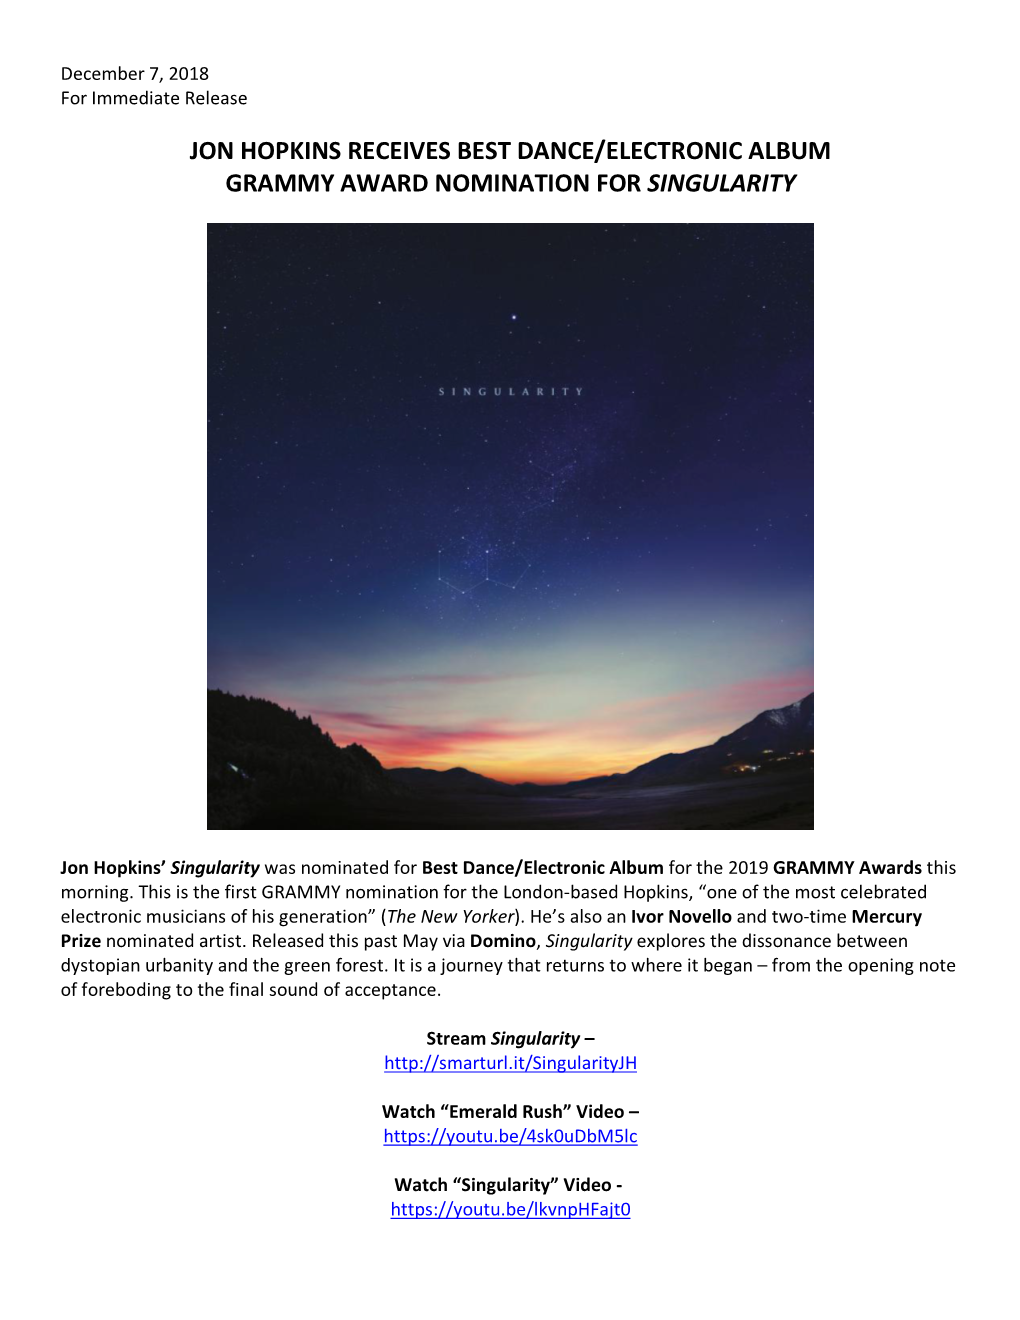 Jon Hopkins Receives Best Dance/Electronic Album Grammy Award Nomination for Singularity